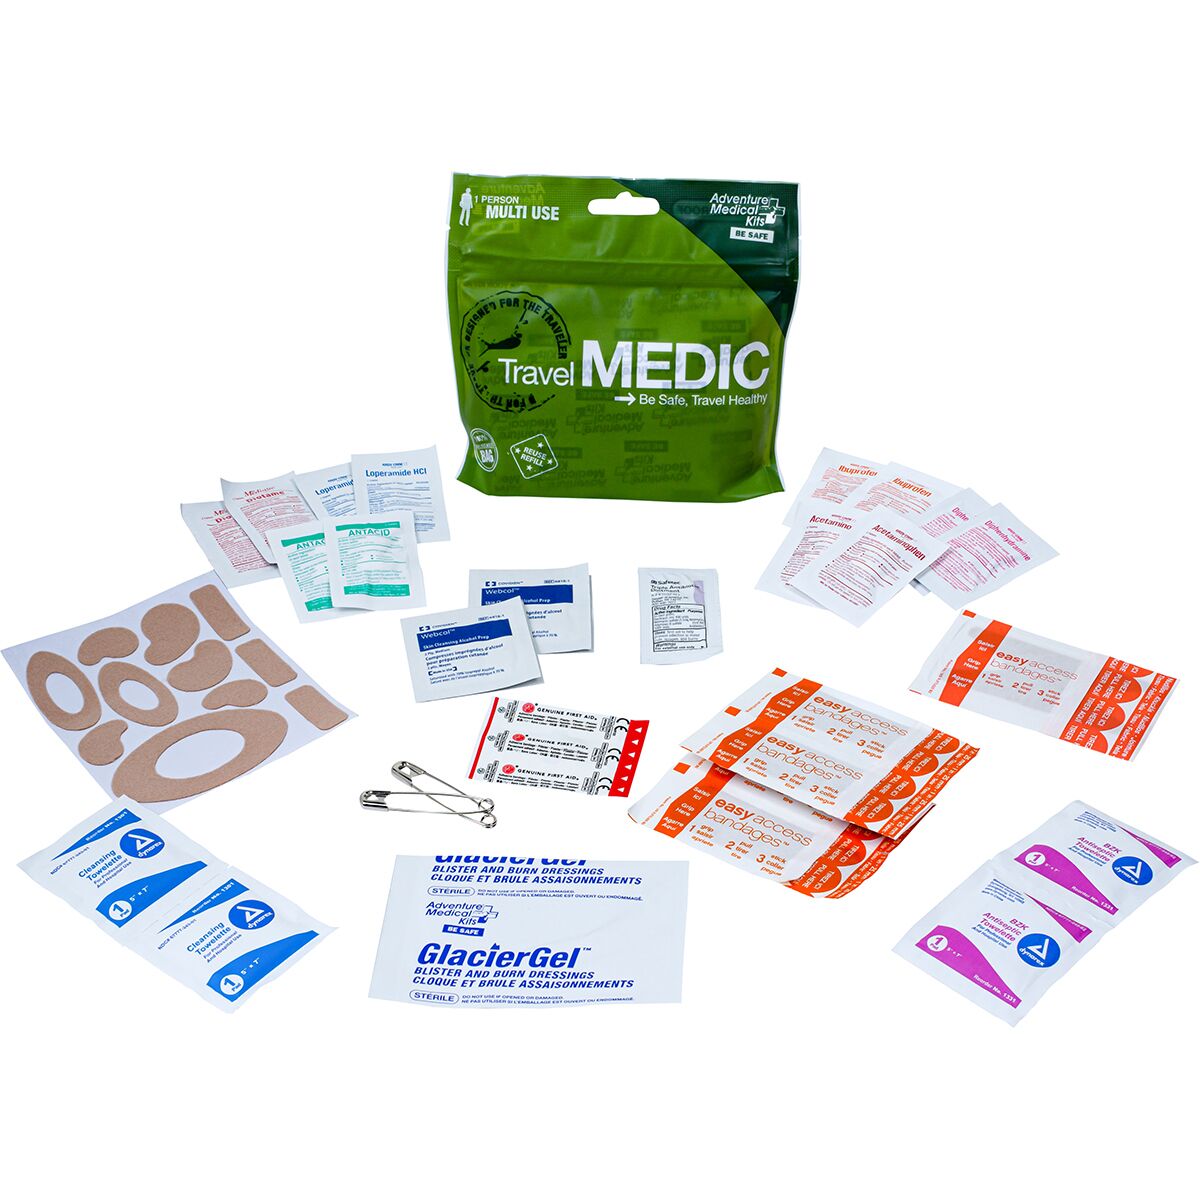 Adventure Medical Kits Travel Medic First Aid Kit